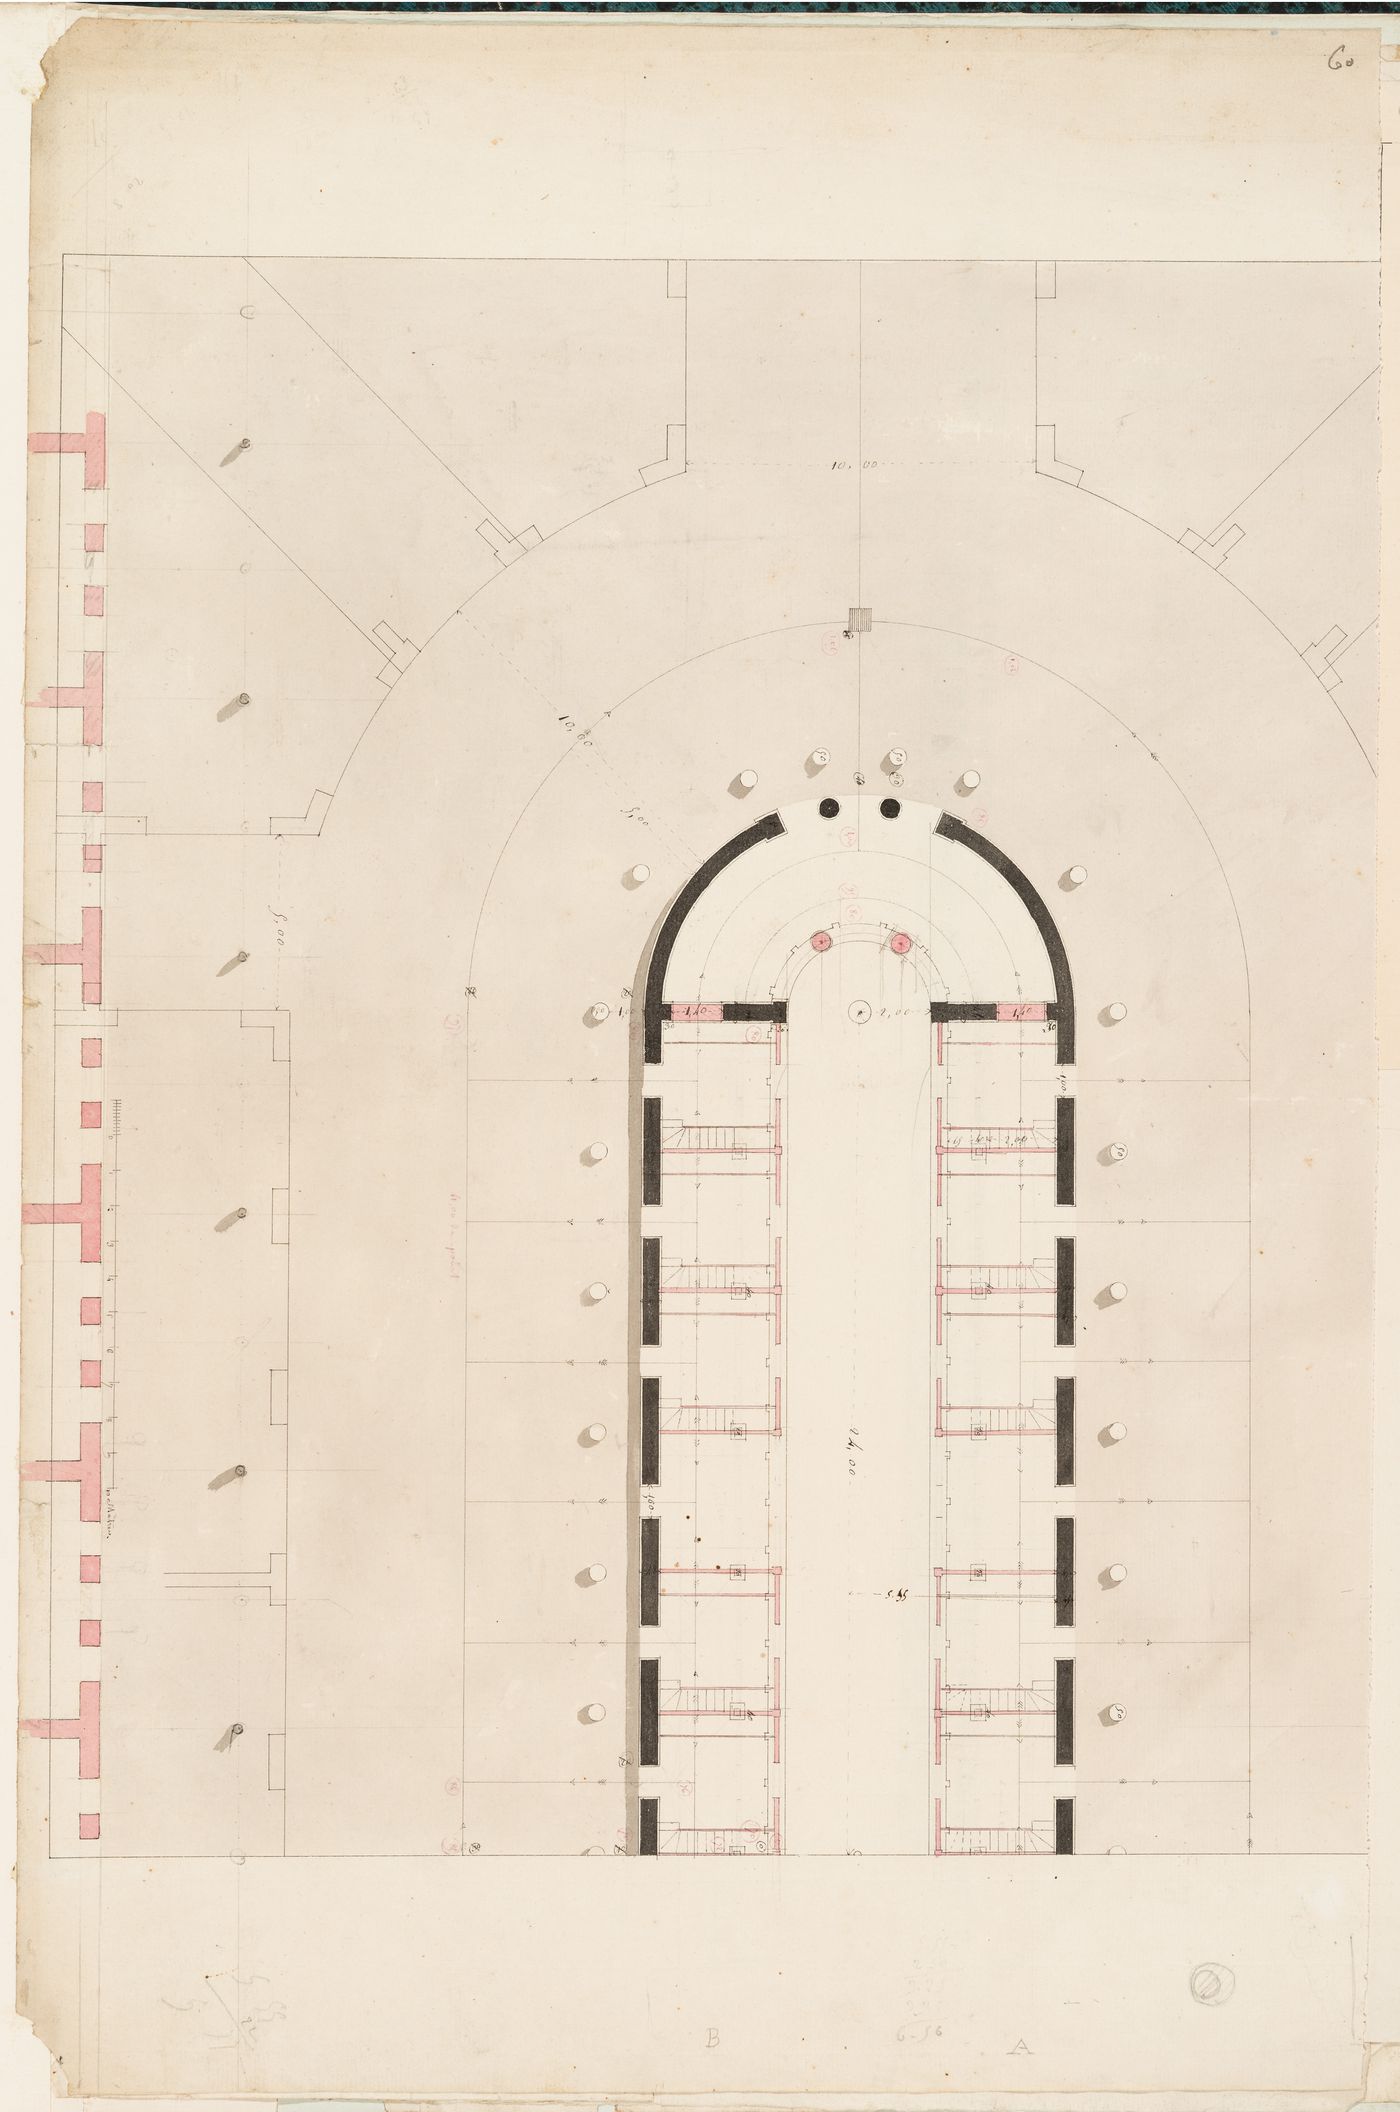 Half plan for the central building for an "entrepôt de vins"